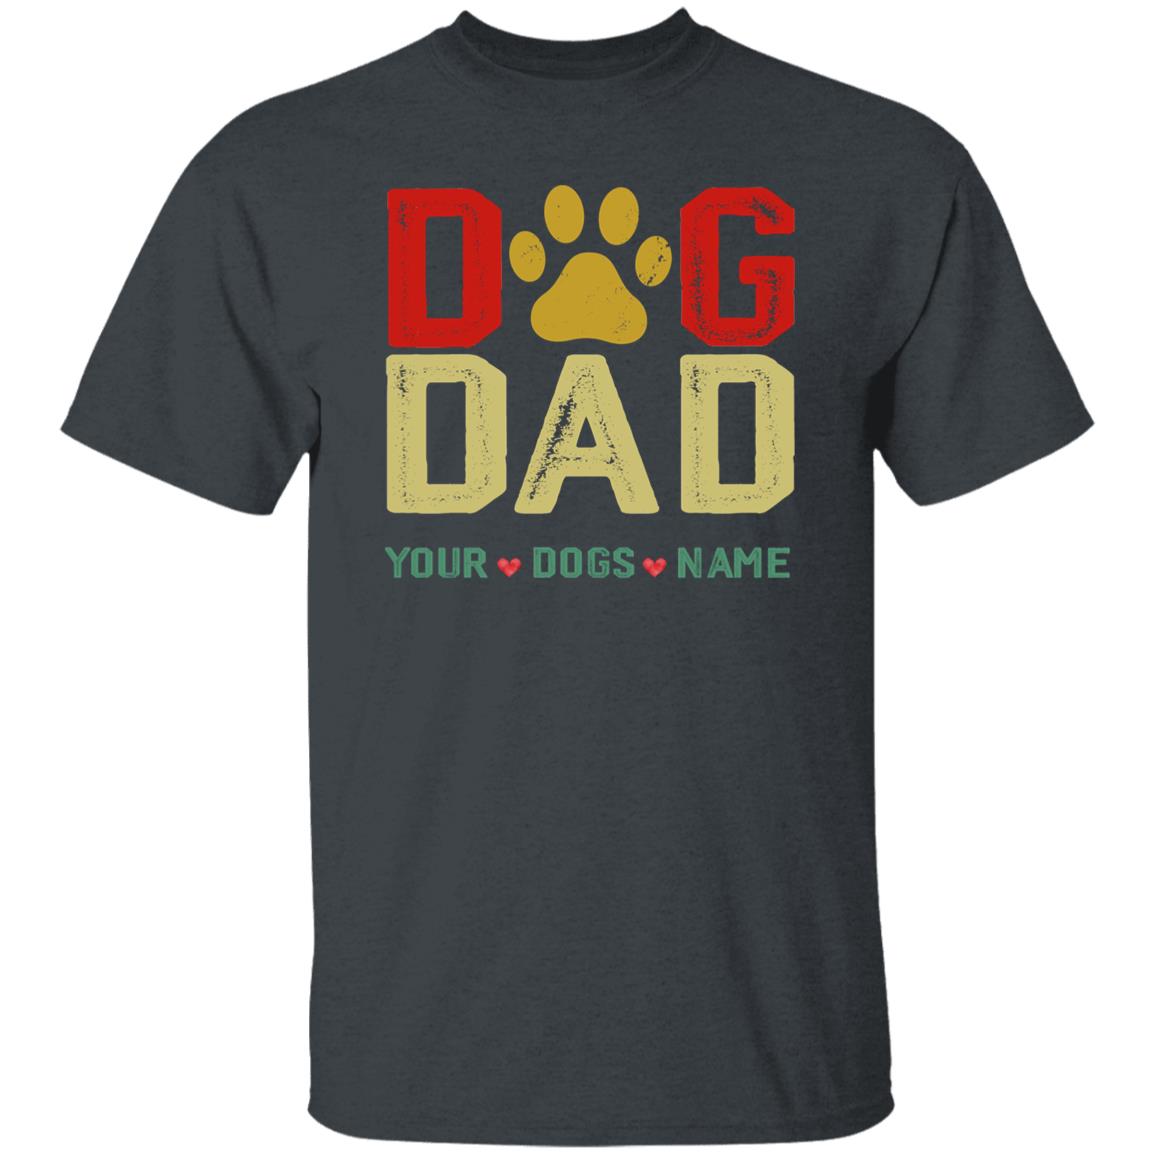 Customized Dog Dad Shirt with Dog Names Gift